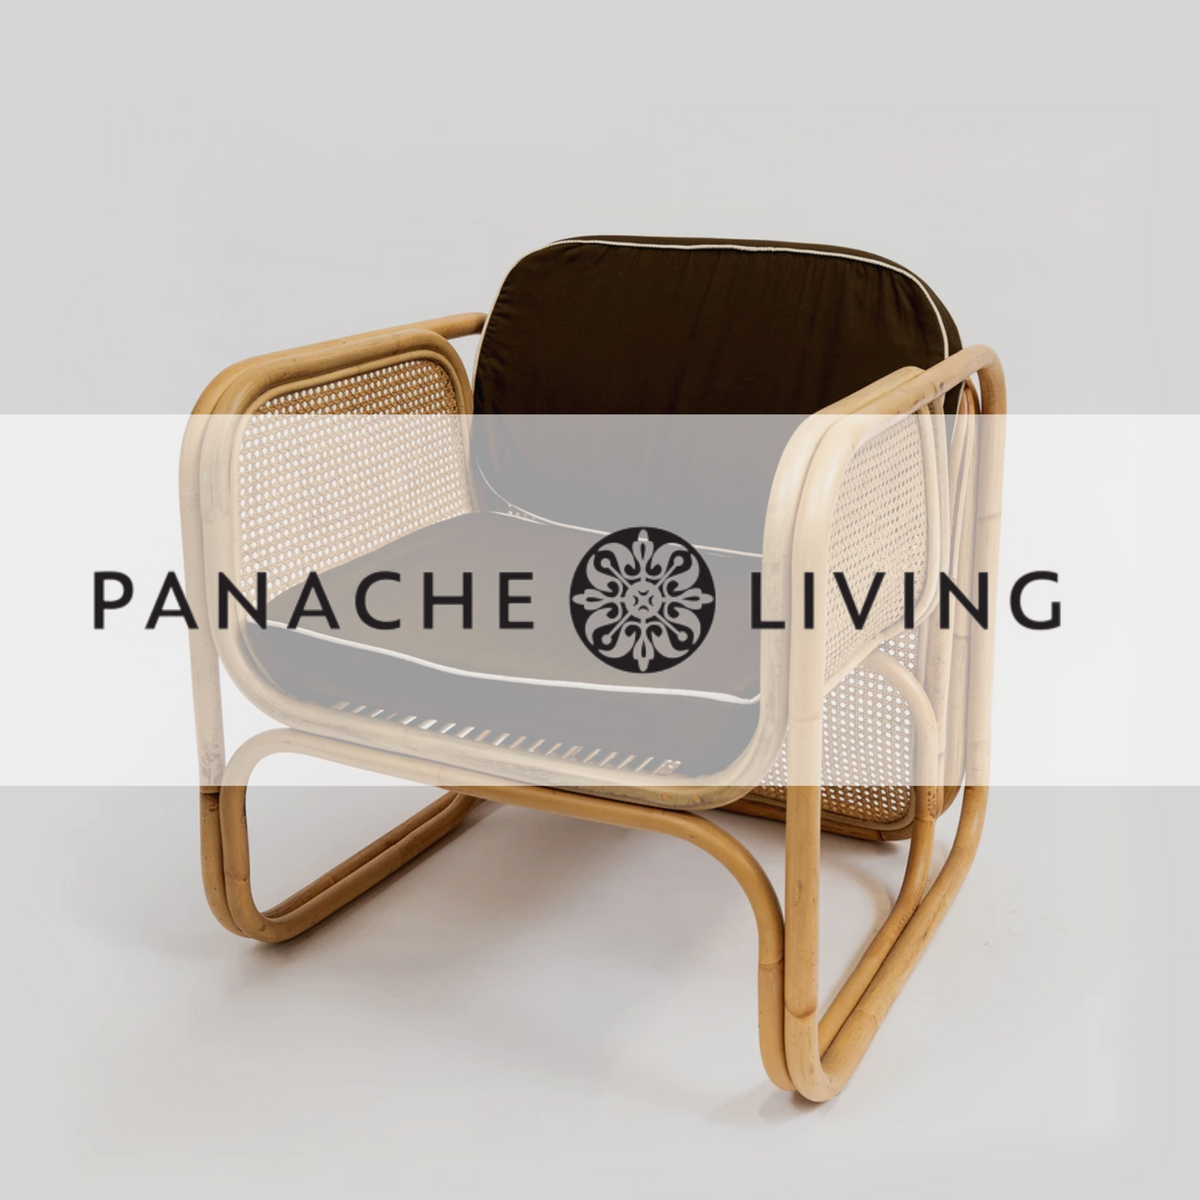 How To Clean Rattan Furniture – Panache Living